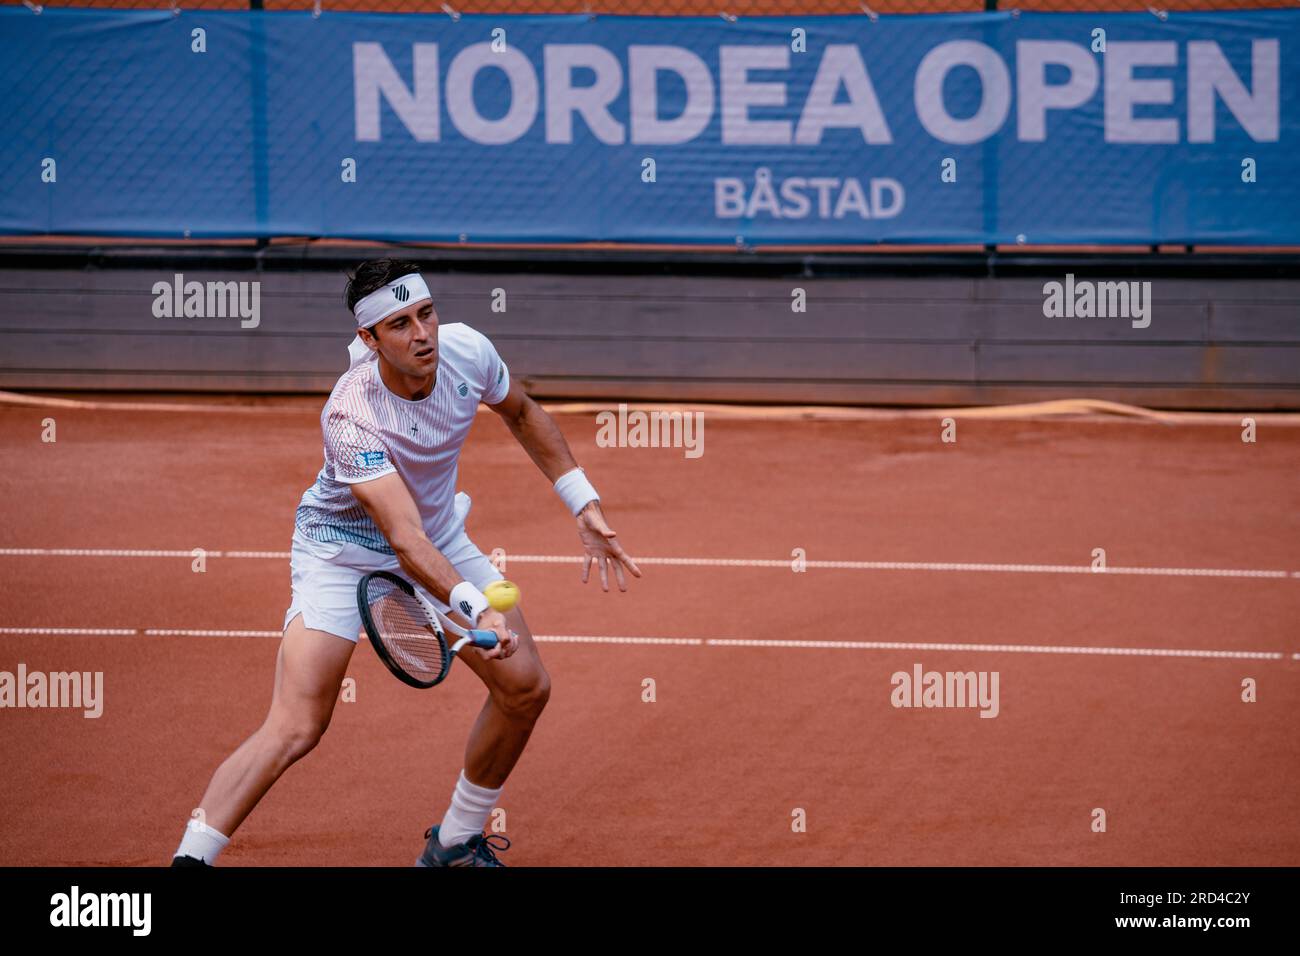 Båstad, Sweden. 07 18 2023. Tomas Martin Etecheverry against Sebastian Ofner in the first round of the Nordea Open. Daniel Bengtsson Stock Photo